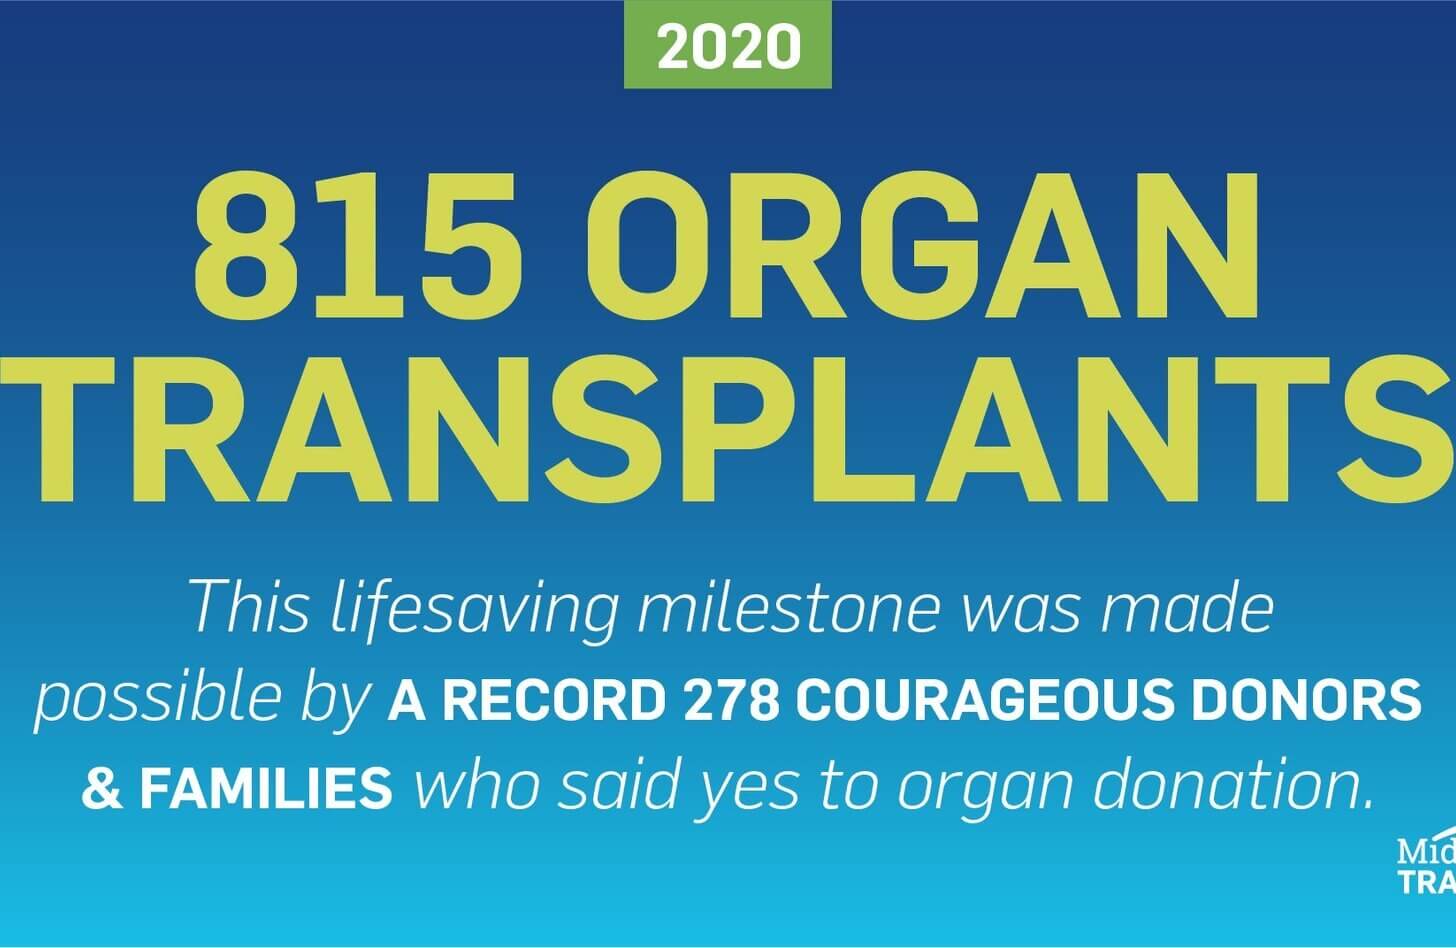 Record Breaking organ donation 2020